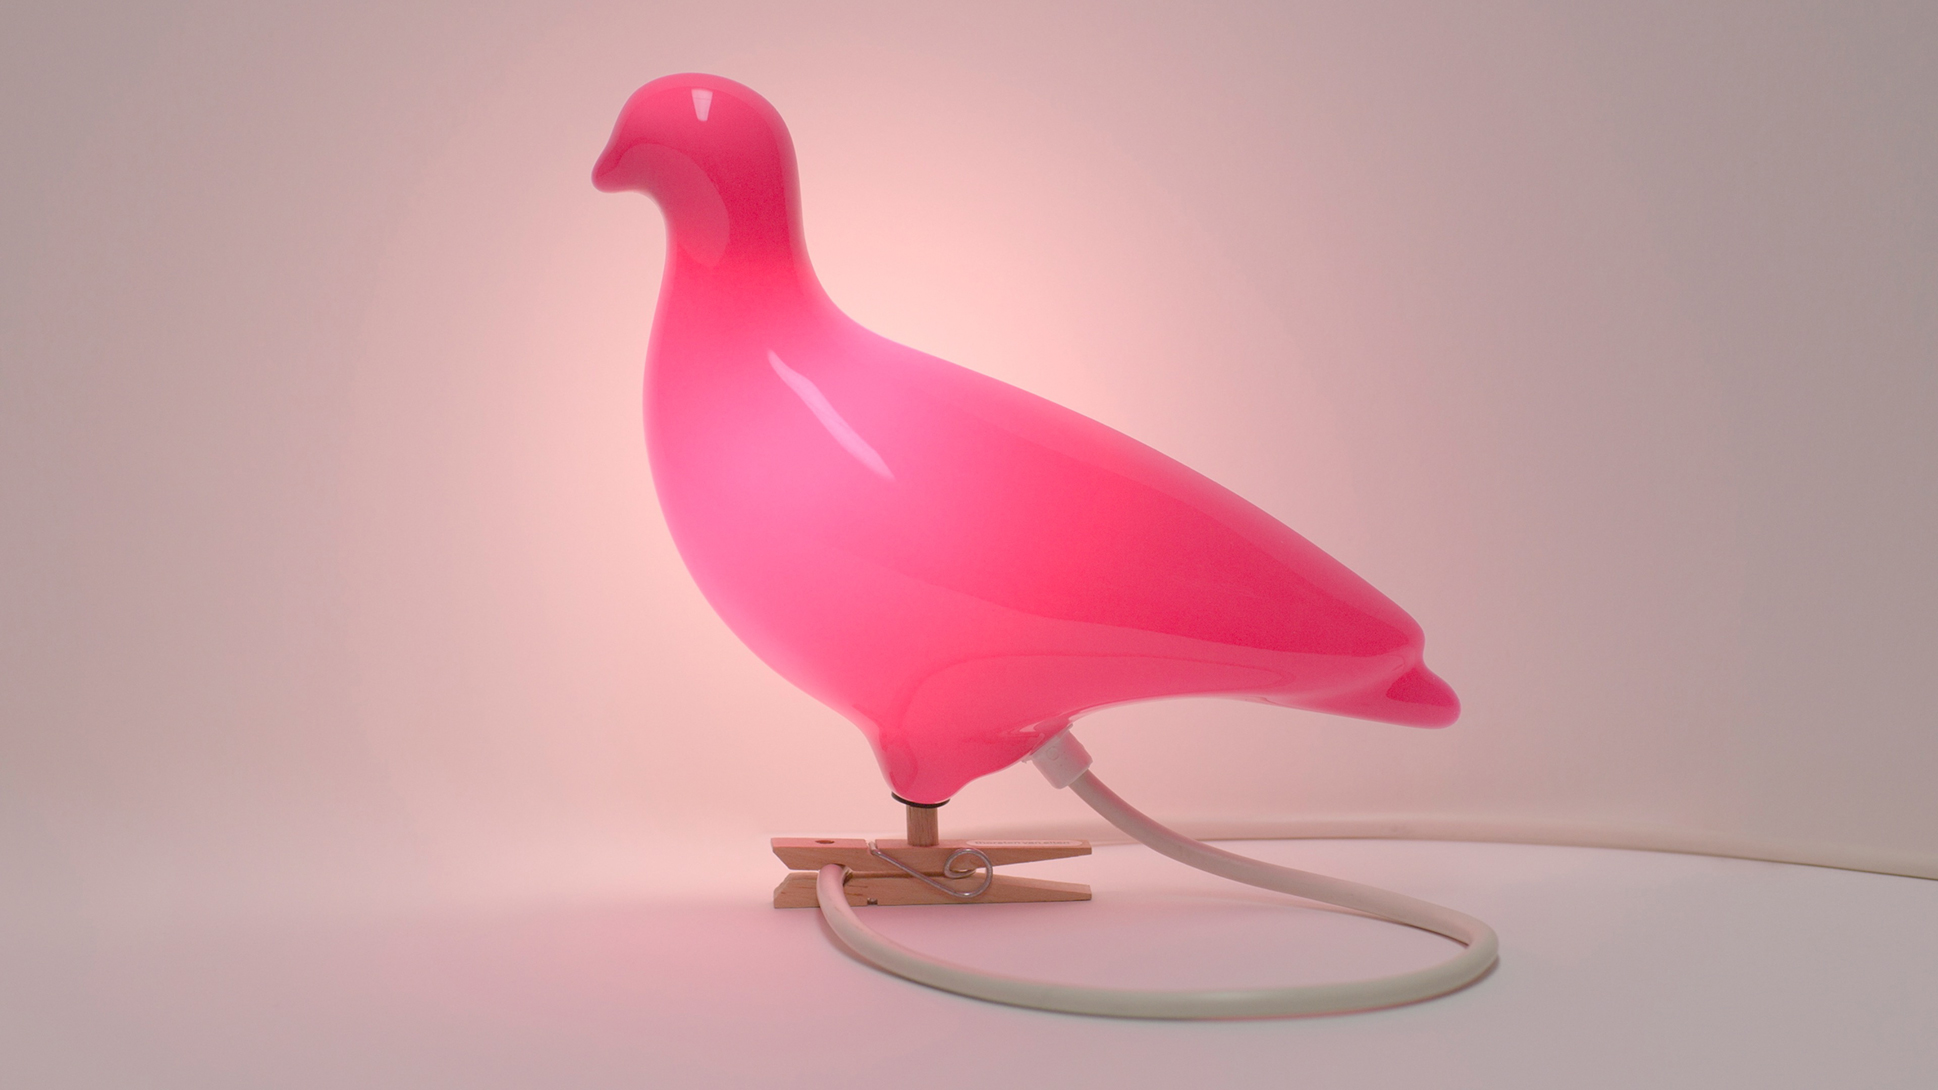 Pigeon Light by Ed Carpenter